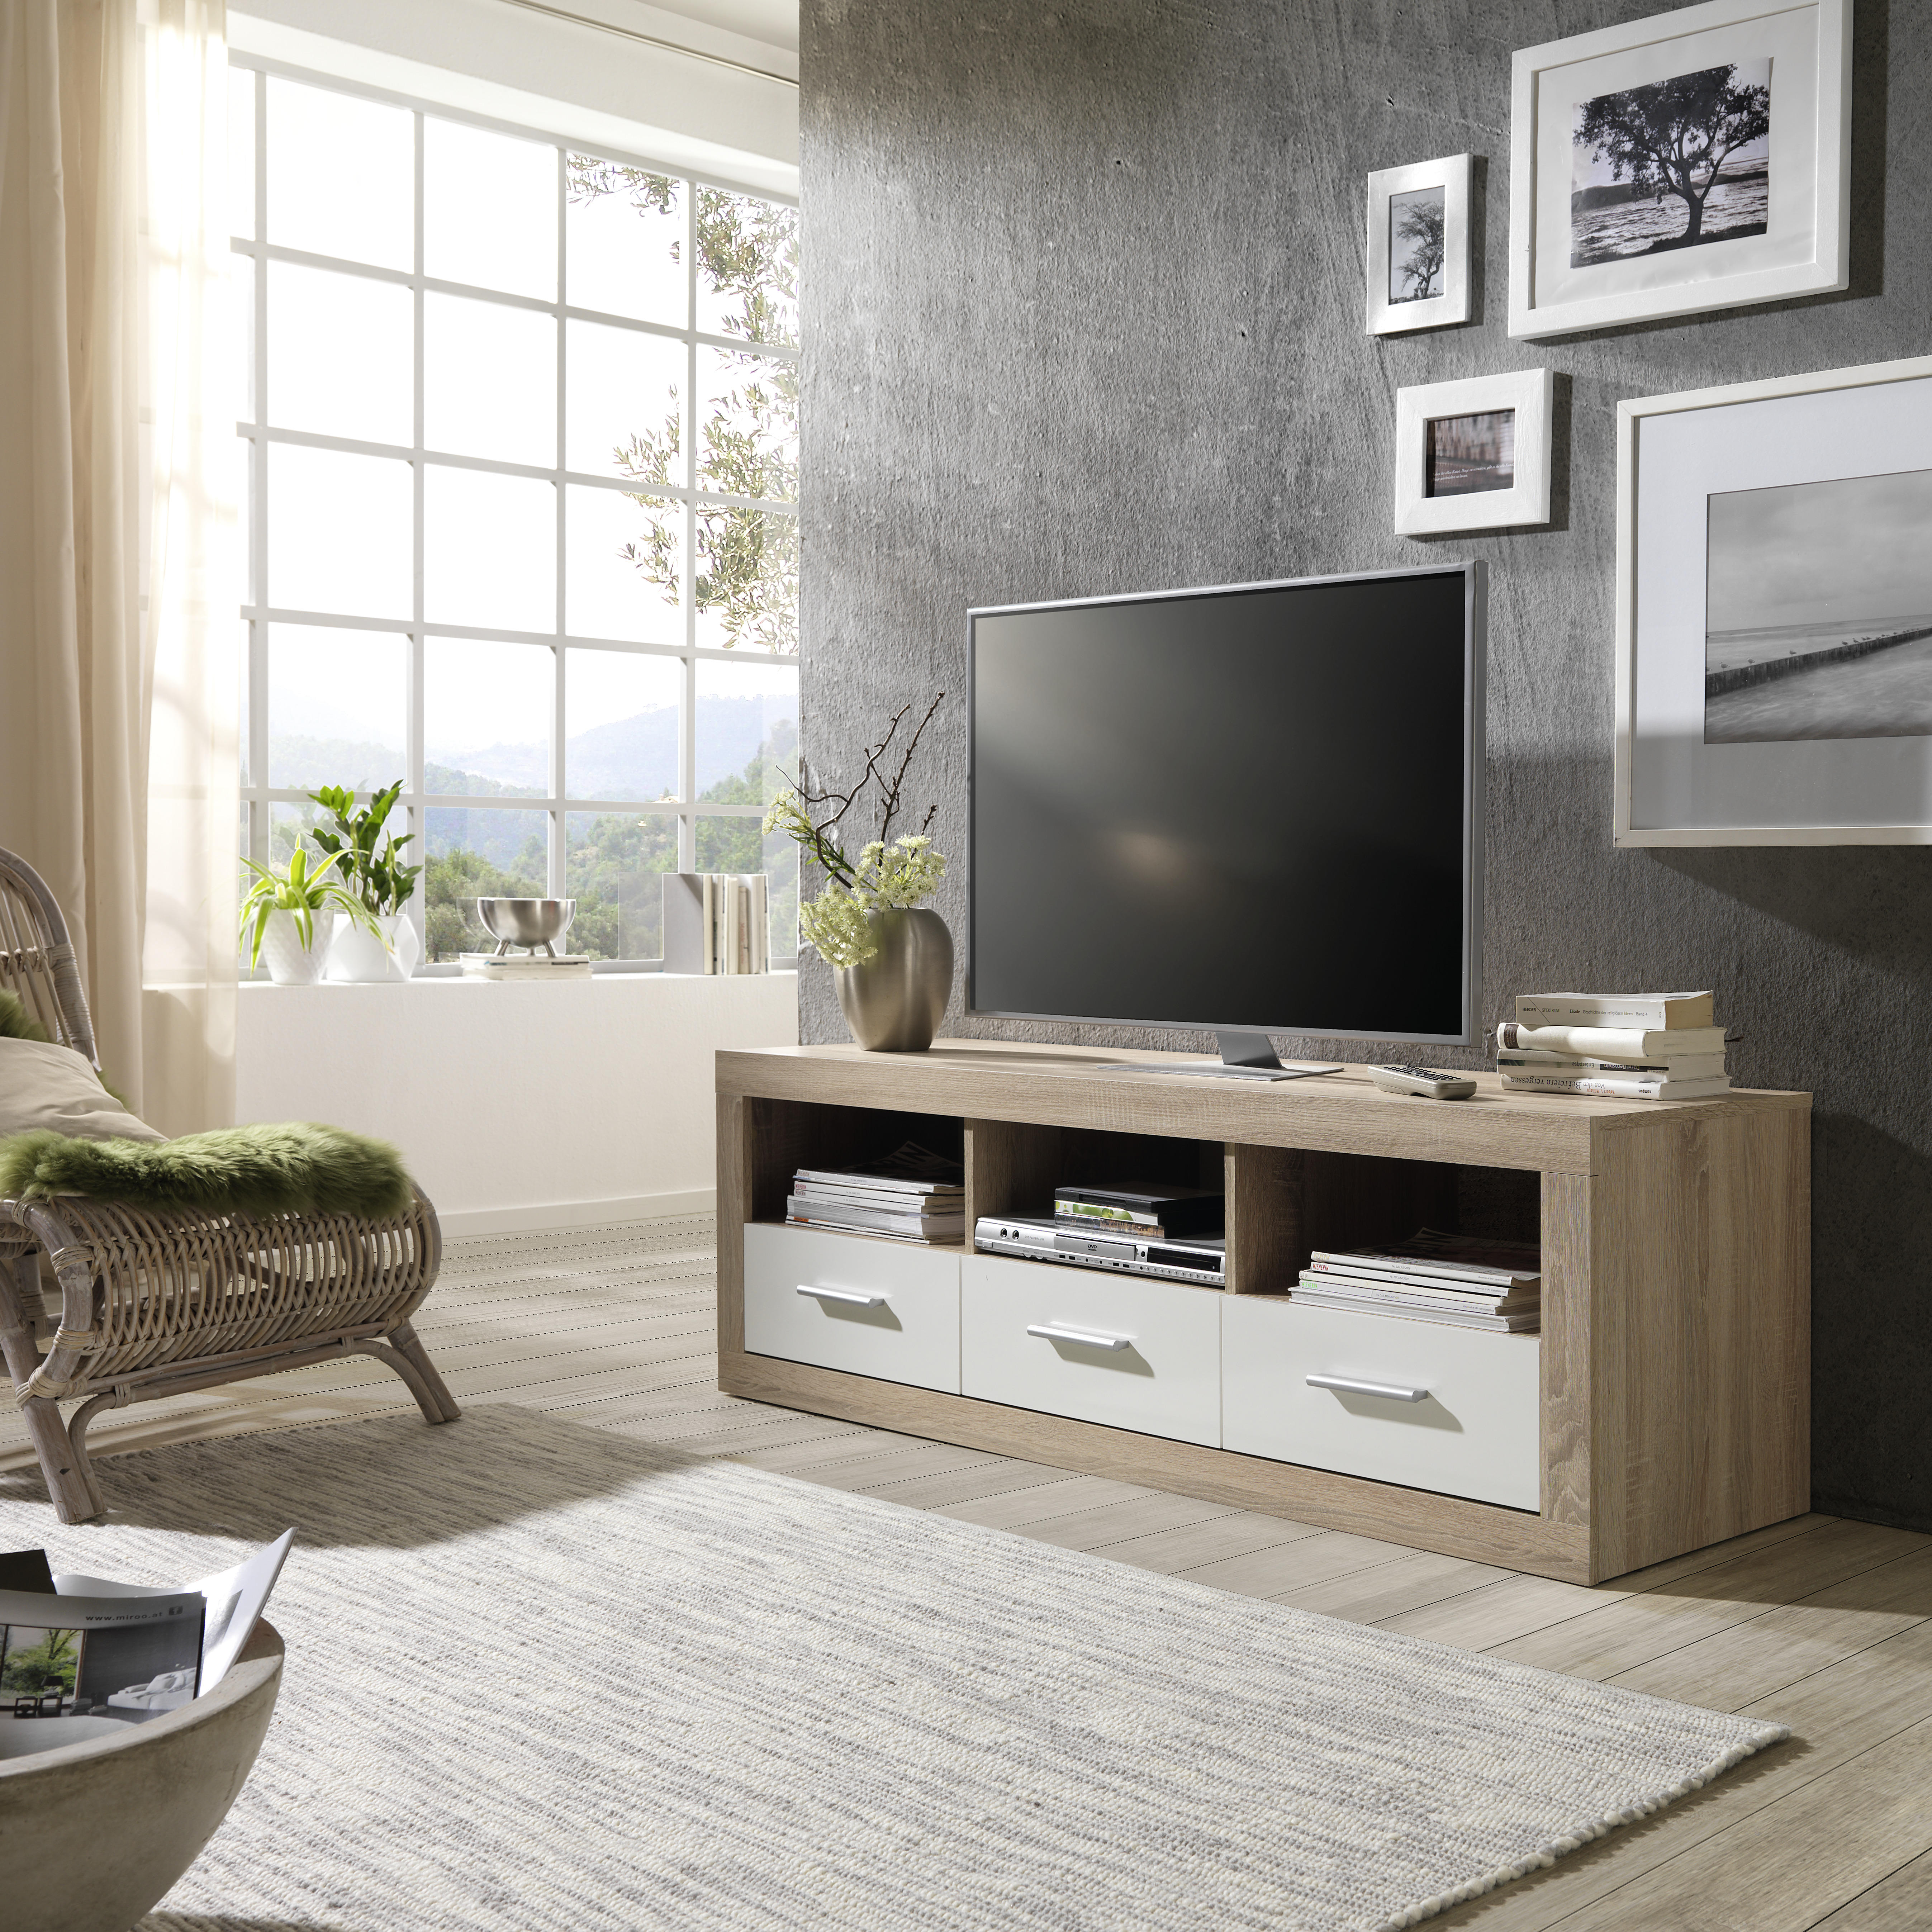 TV DÍL, bílá, Sonoma dub, 147/49/45 cm - bílá/barvy stříbra, Design, kompozitní dřevo/plast (147/49/45cm) - Boxxx